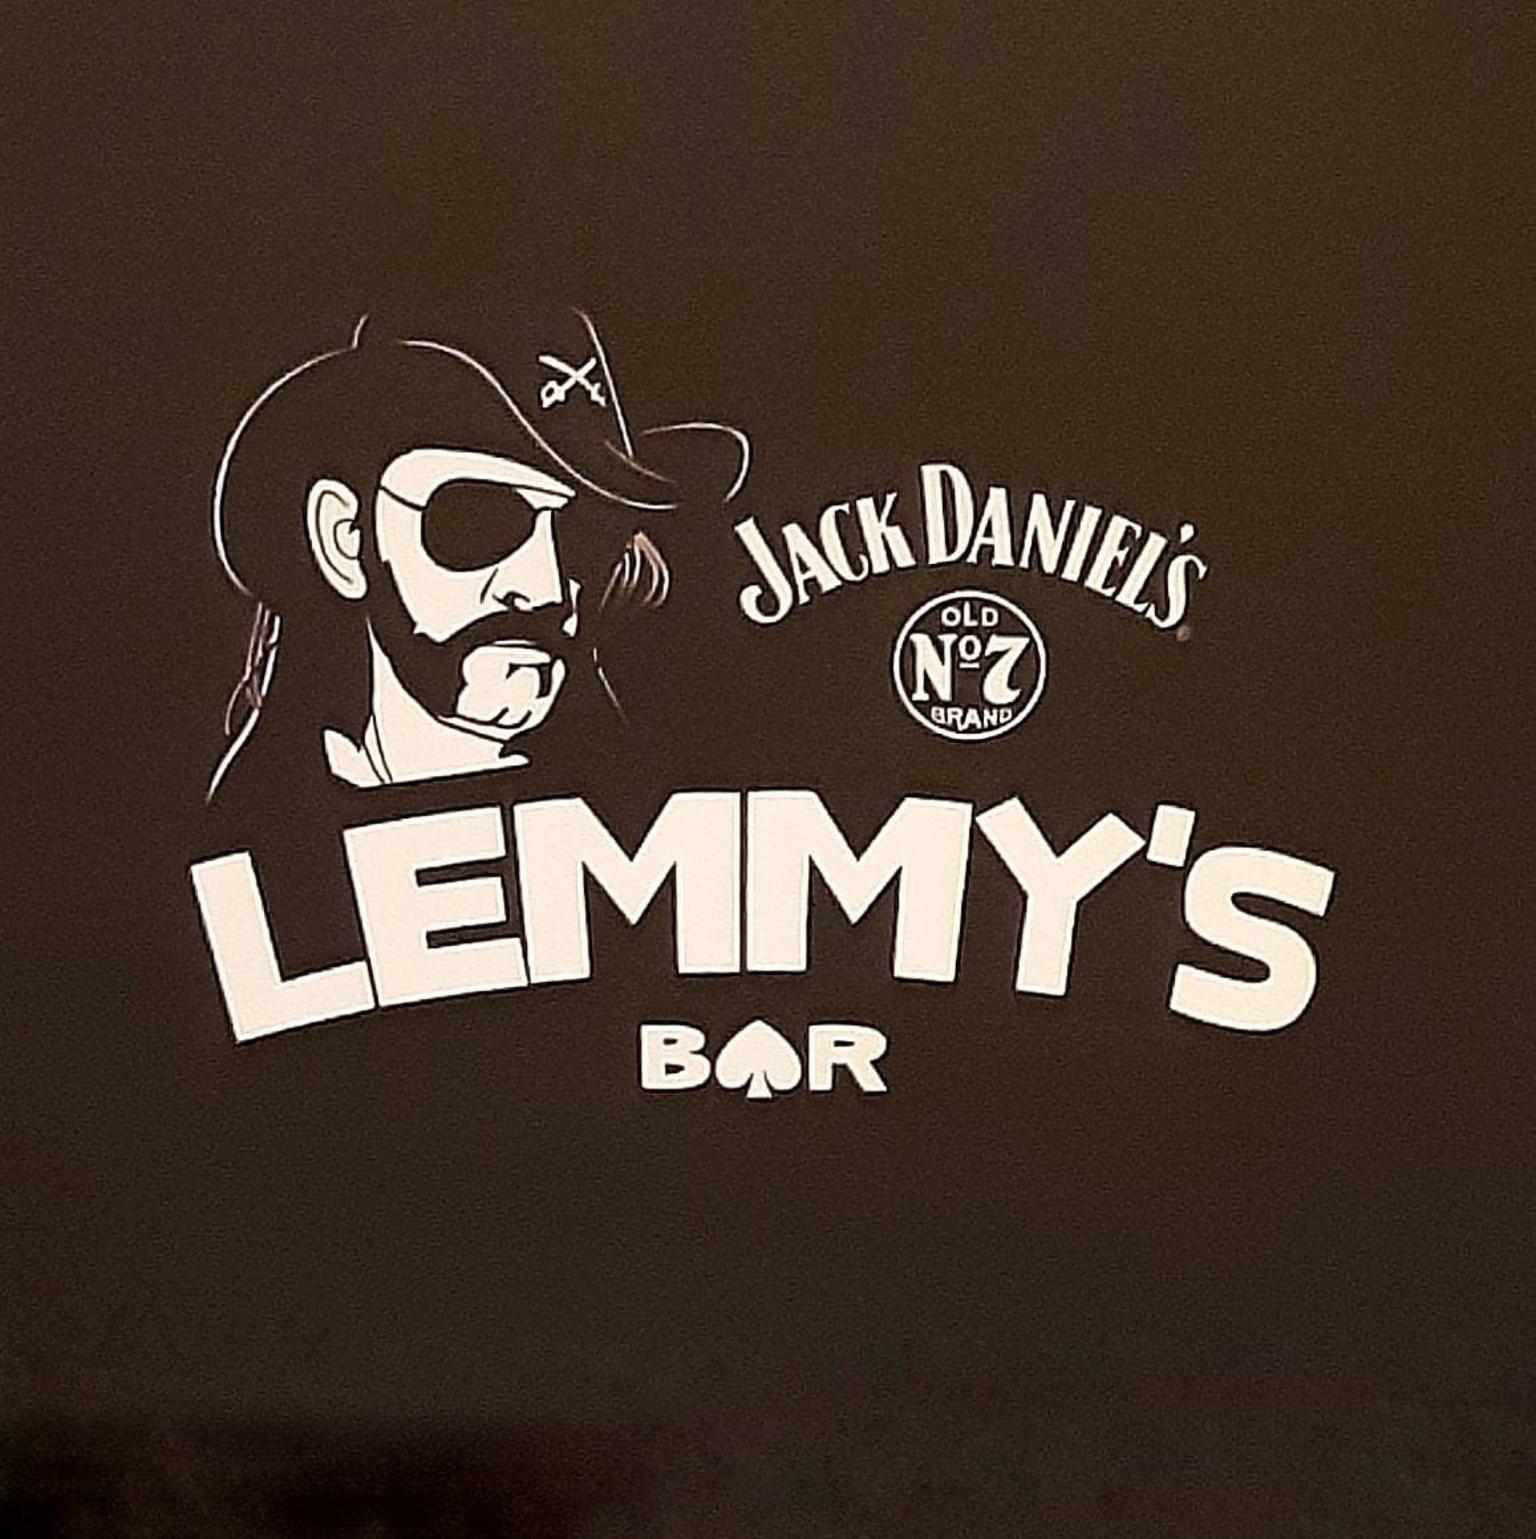 Lemmy's Bar